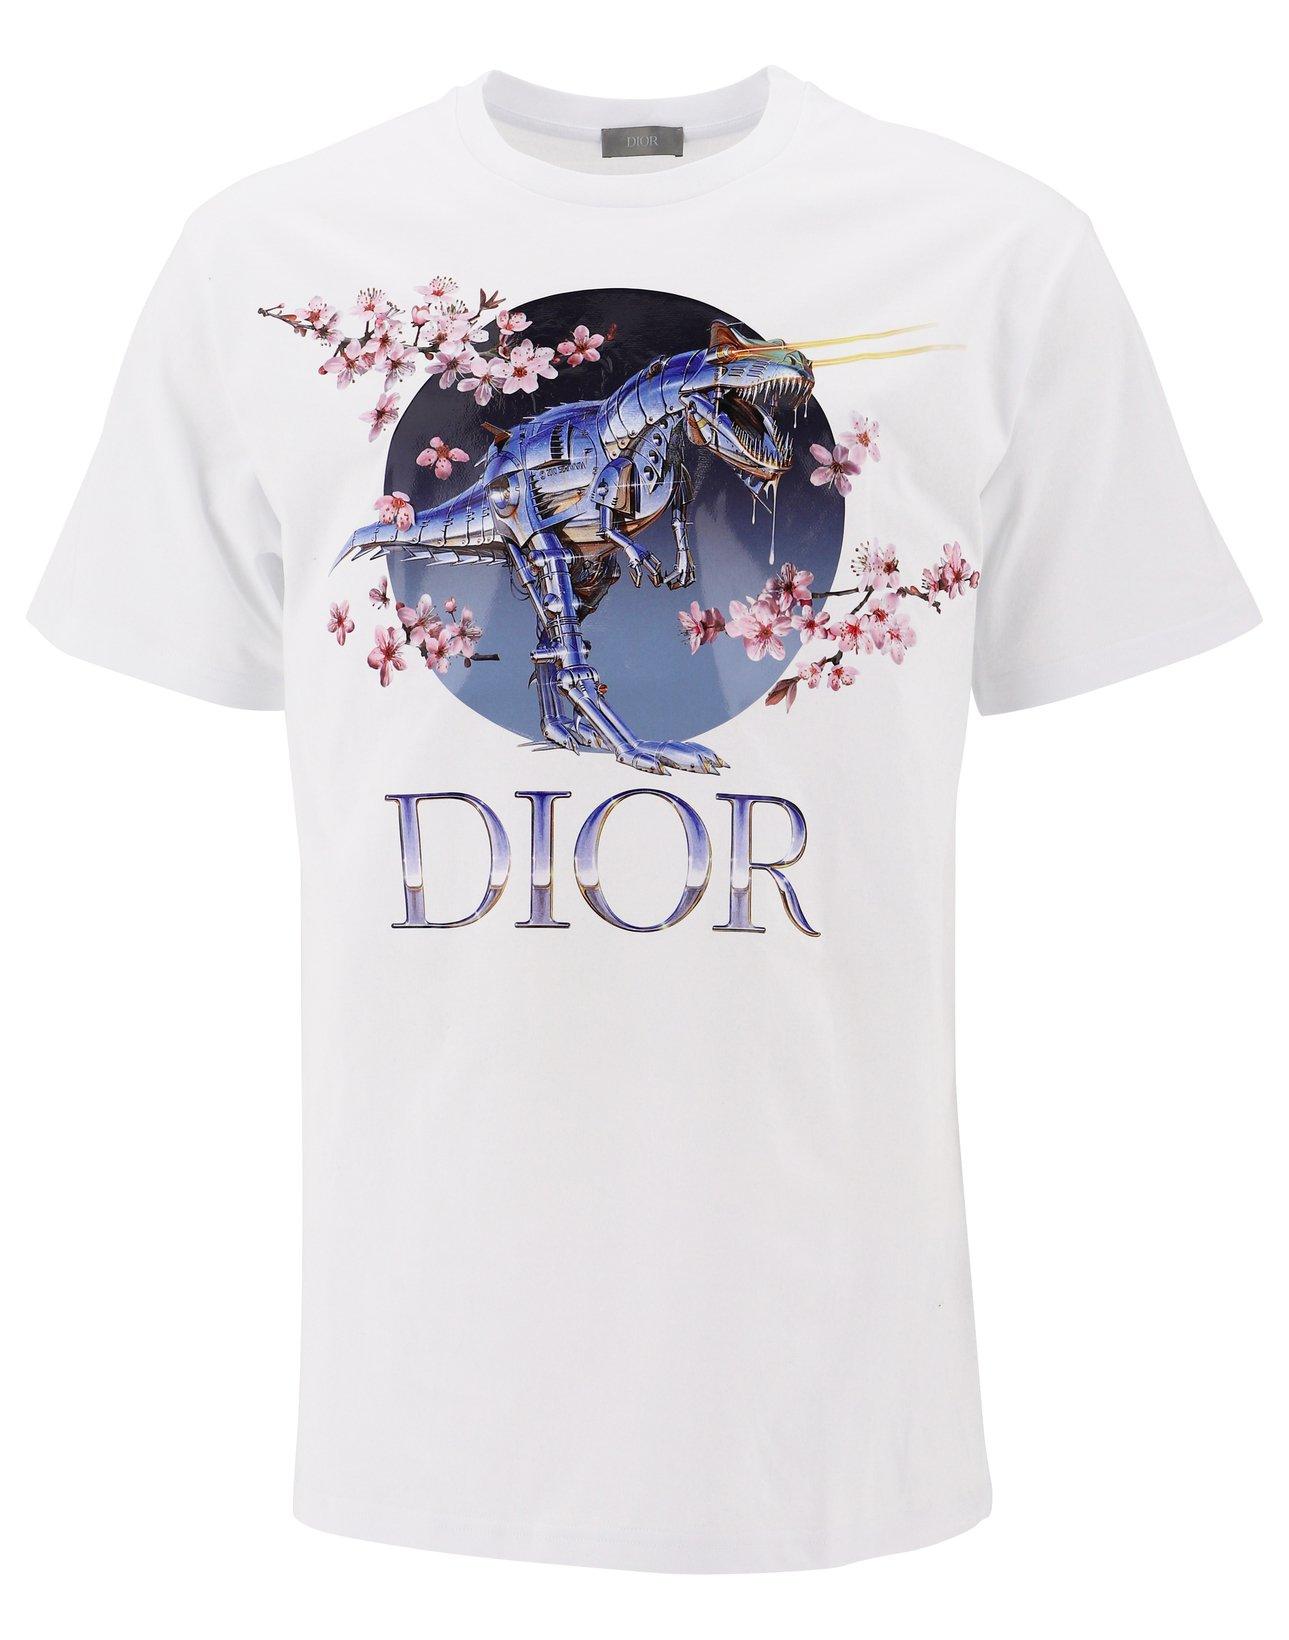 Dior sorayama コラボ Tシャツ | www.jarussi.com.br